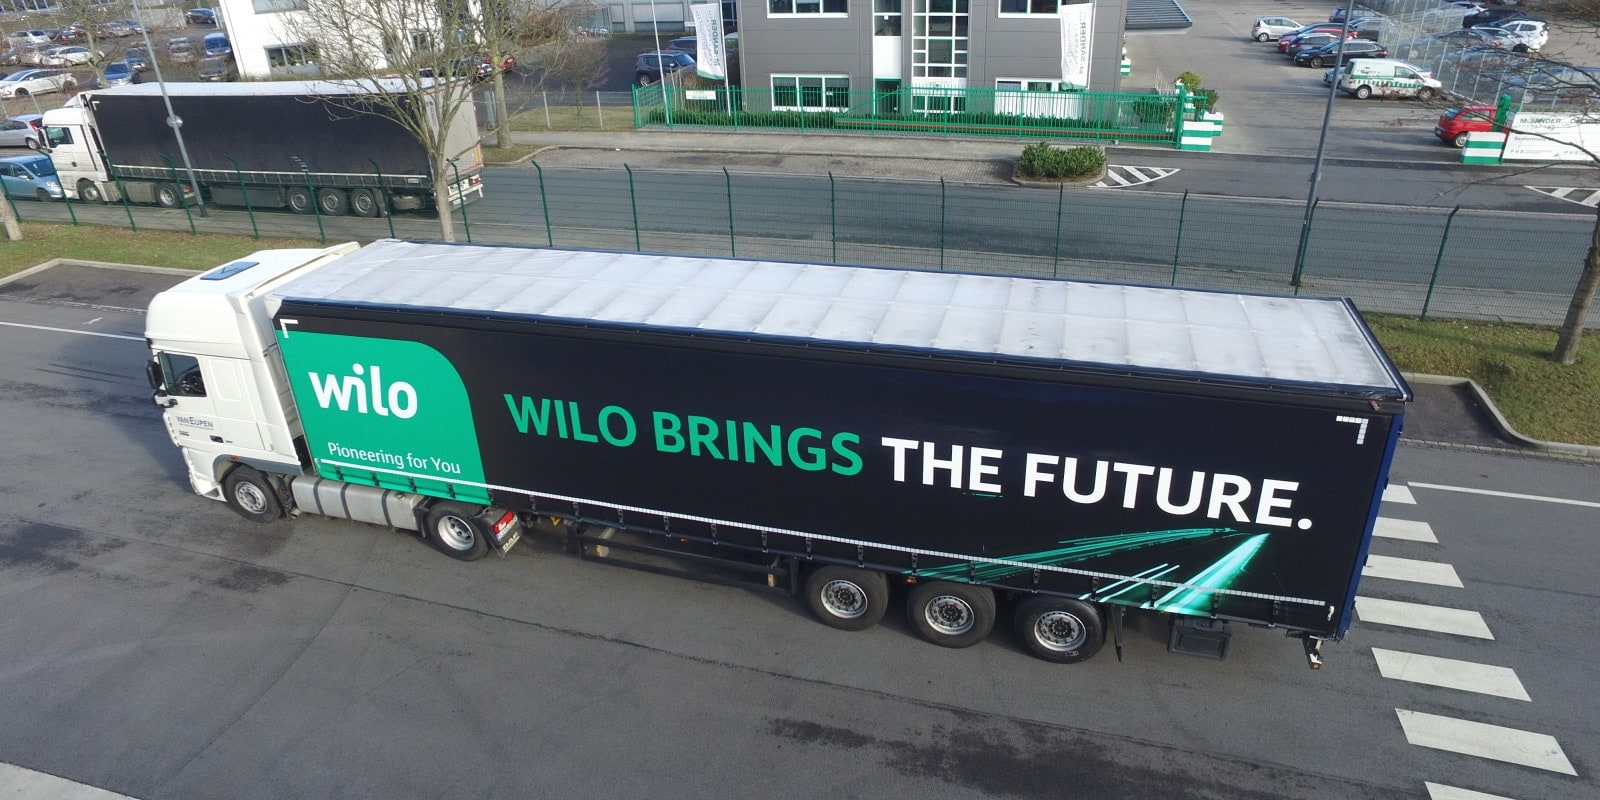 Messe-LKW - Wilo brings the future